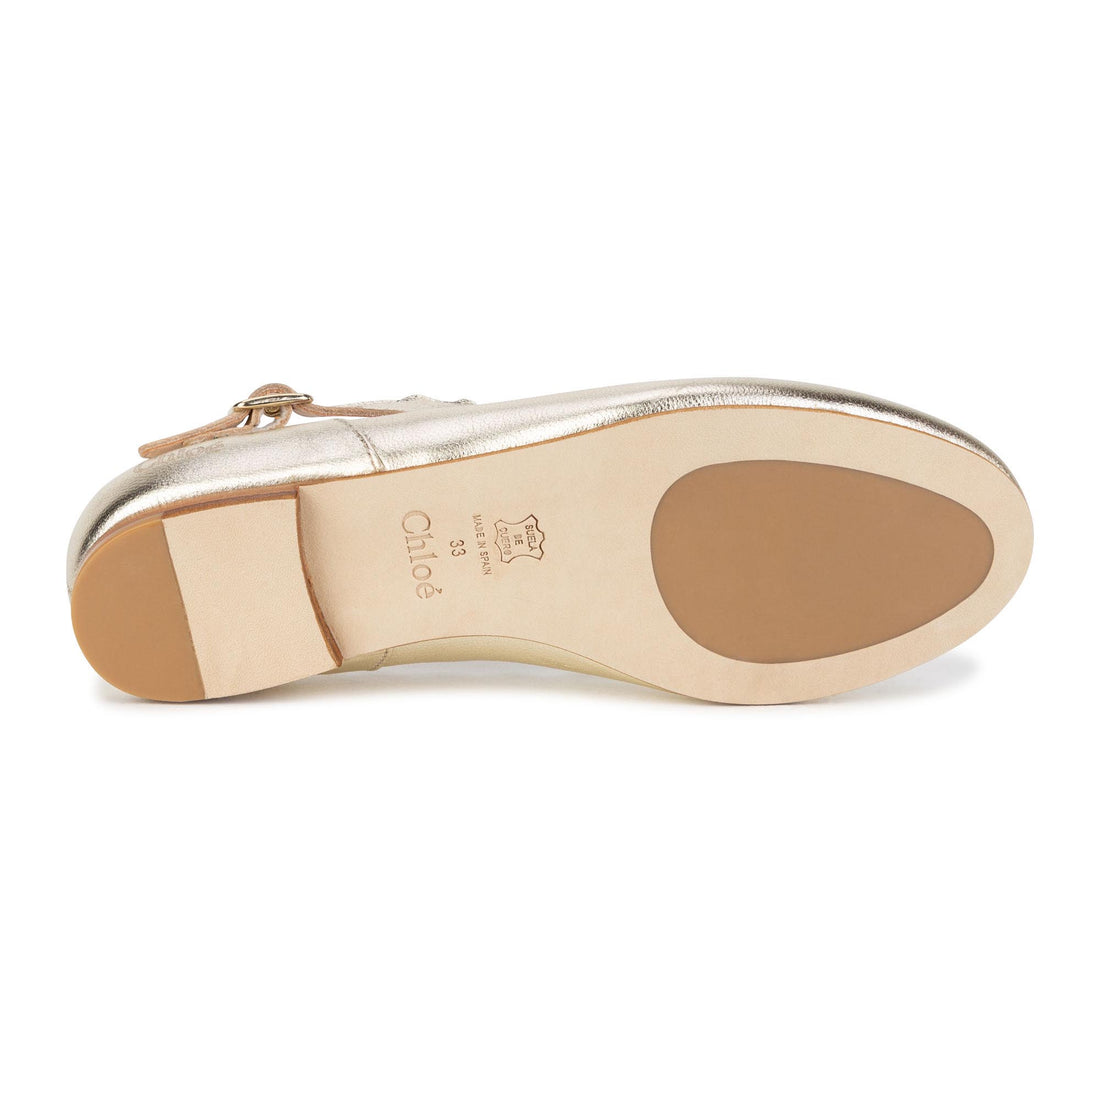 Chloe Light Gold Ballerina Shoes